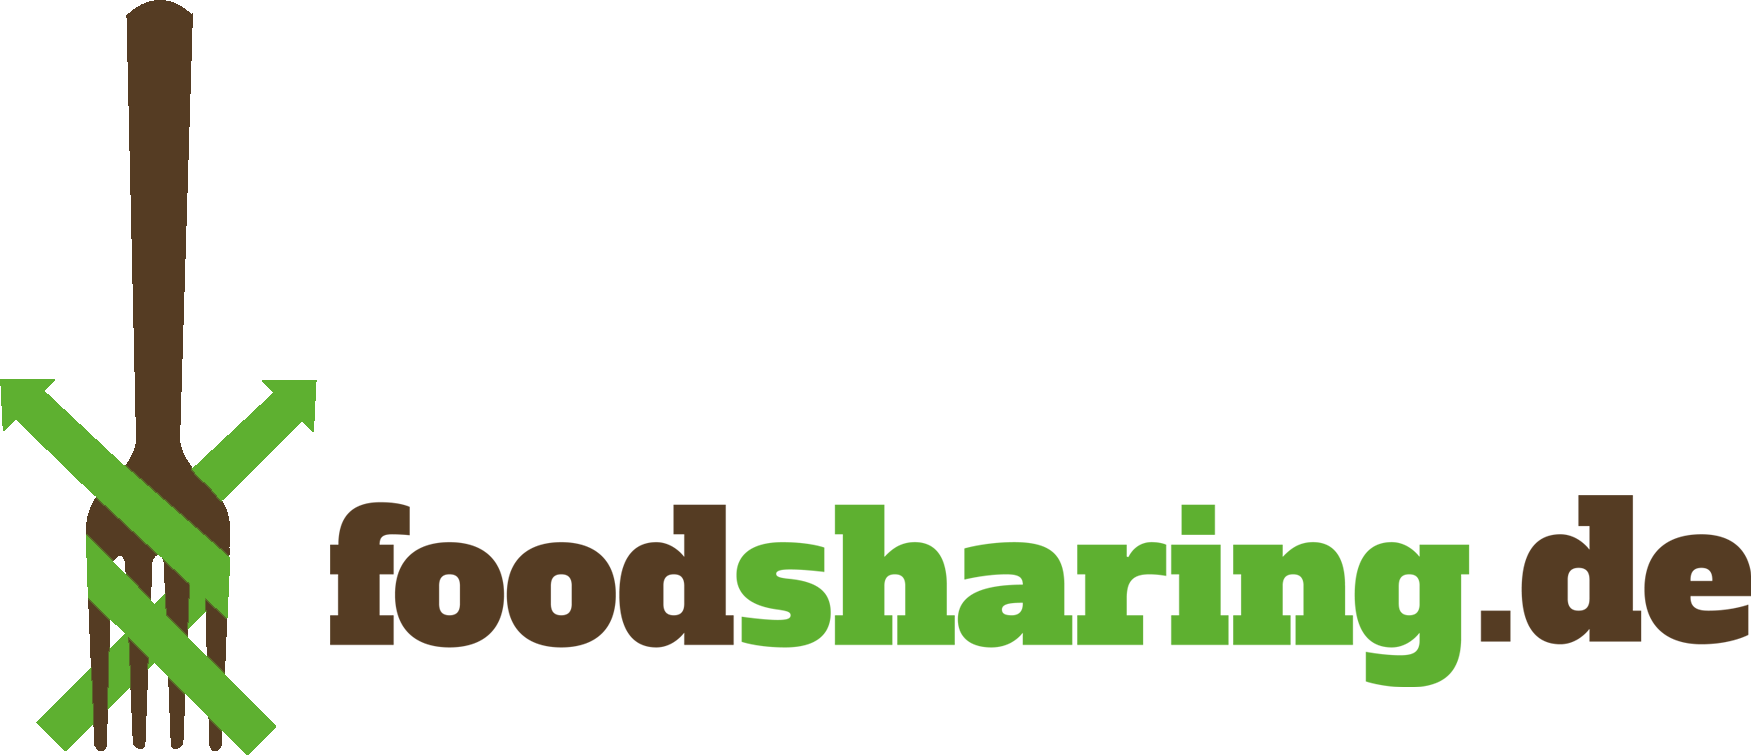 foodsharing logo